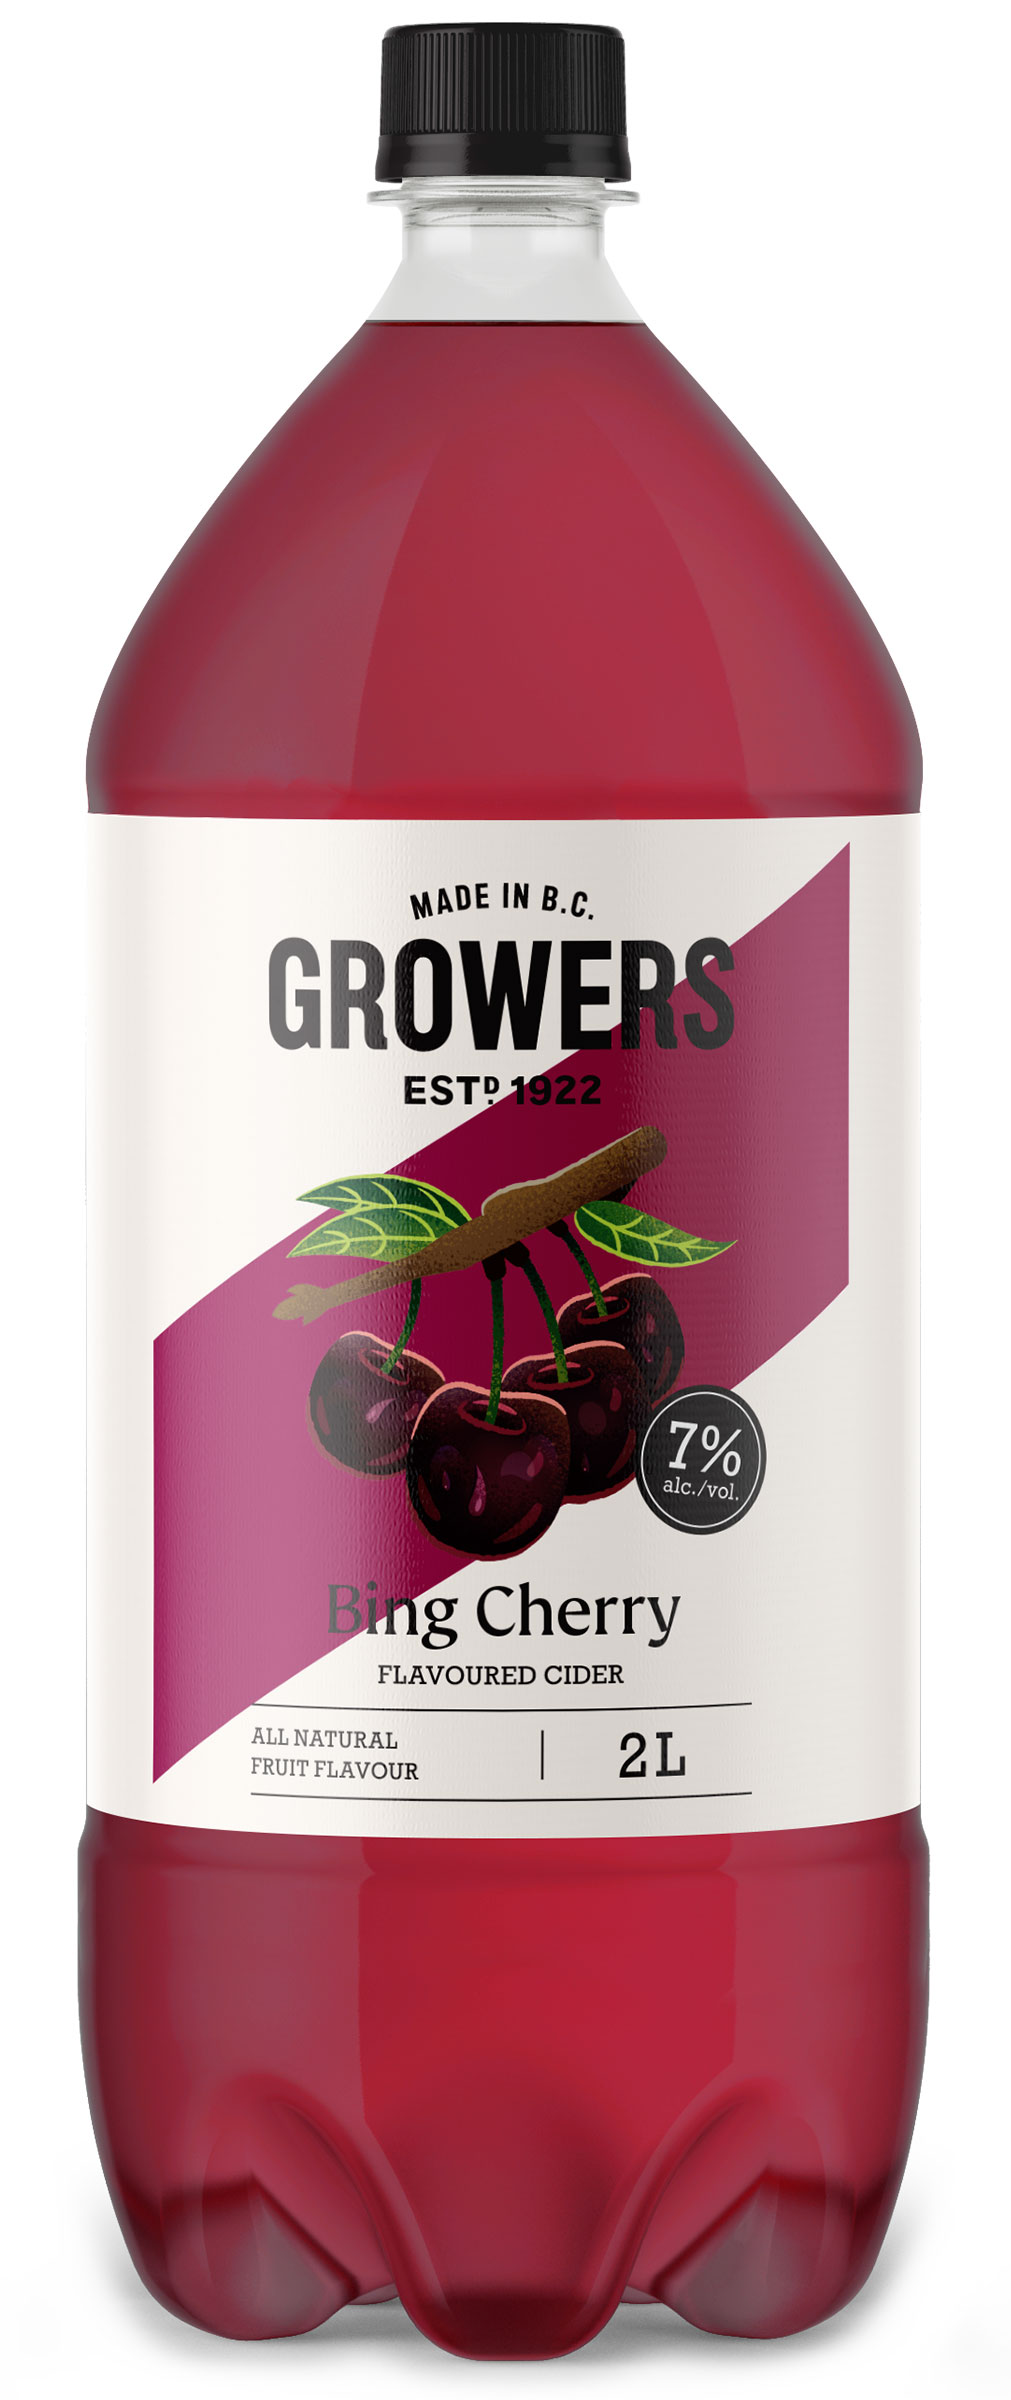 Bottle of Growers Bing Cherry cider